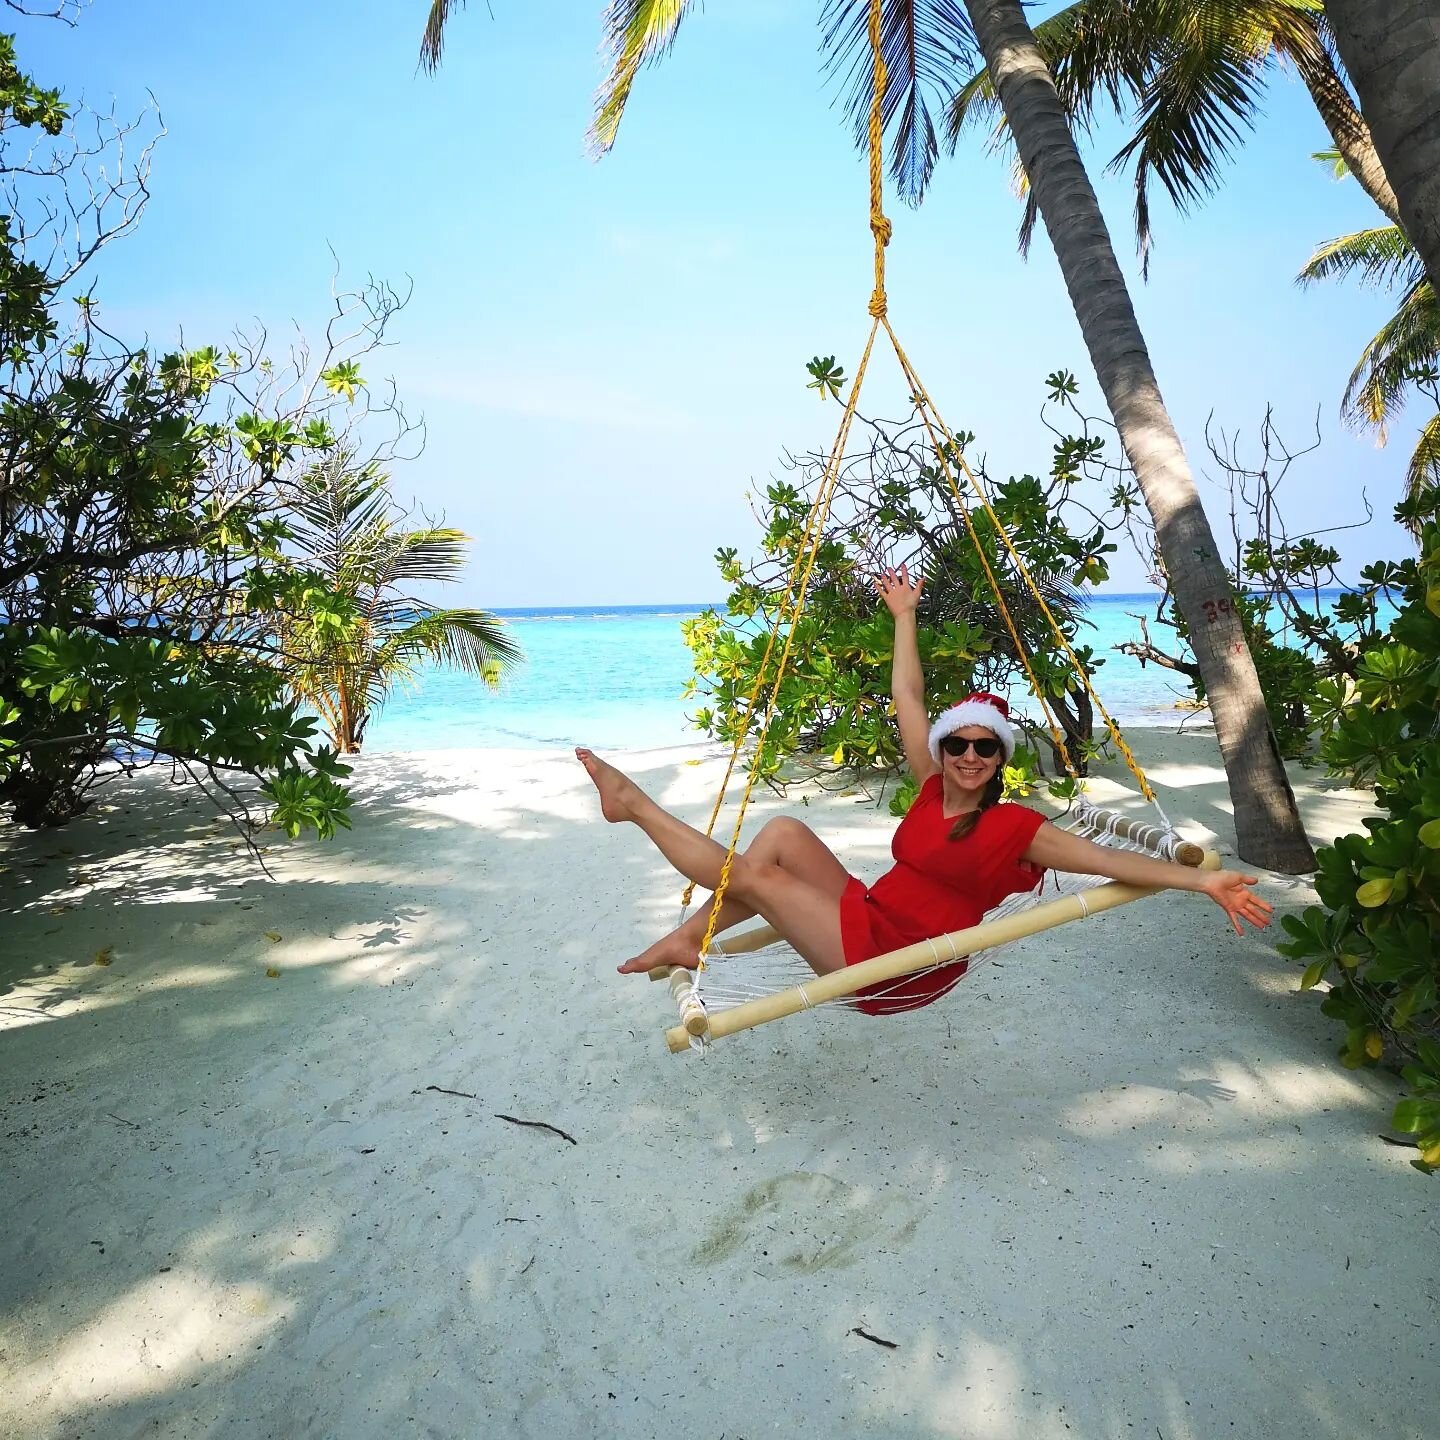 Merry Christmas from the Maldives!

🎄🤶⛄🎅🌟

#santaonaswing #christmassun #bestideaever